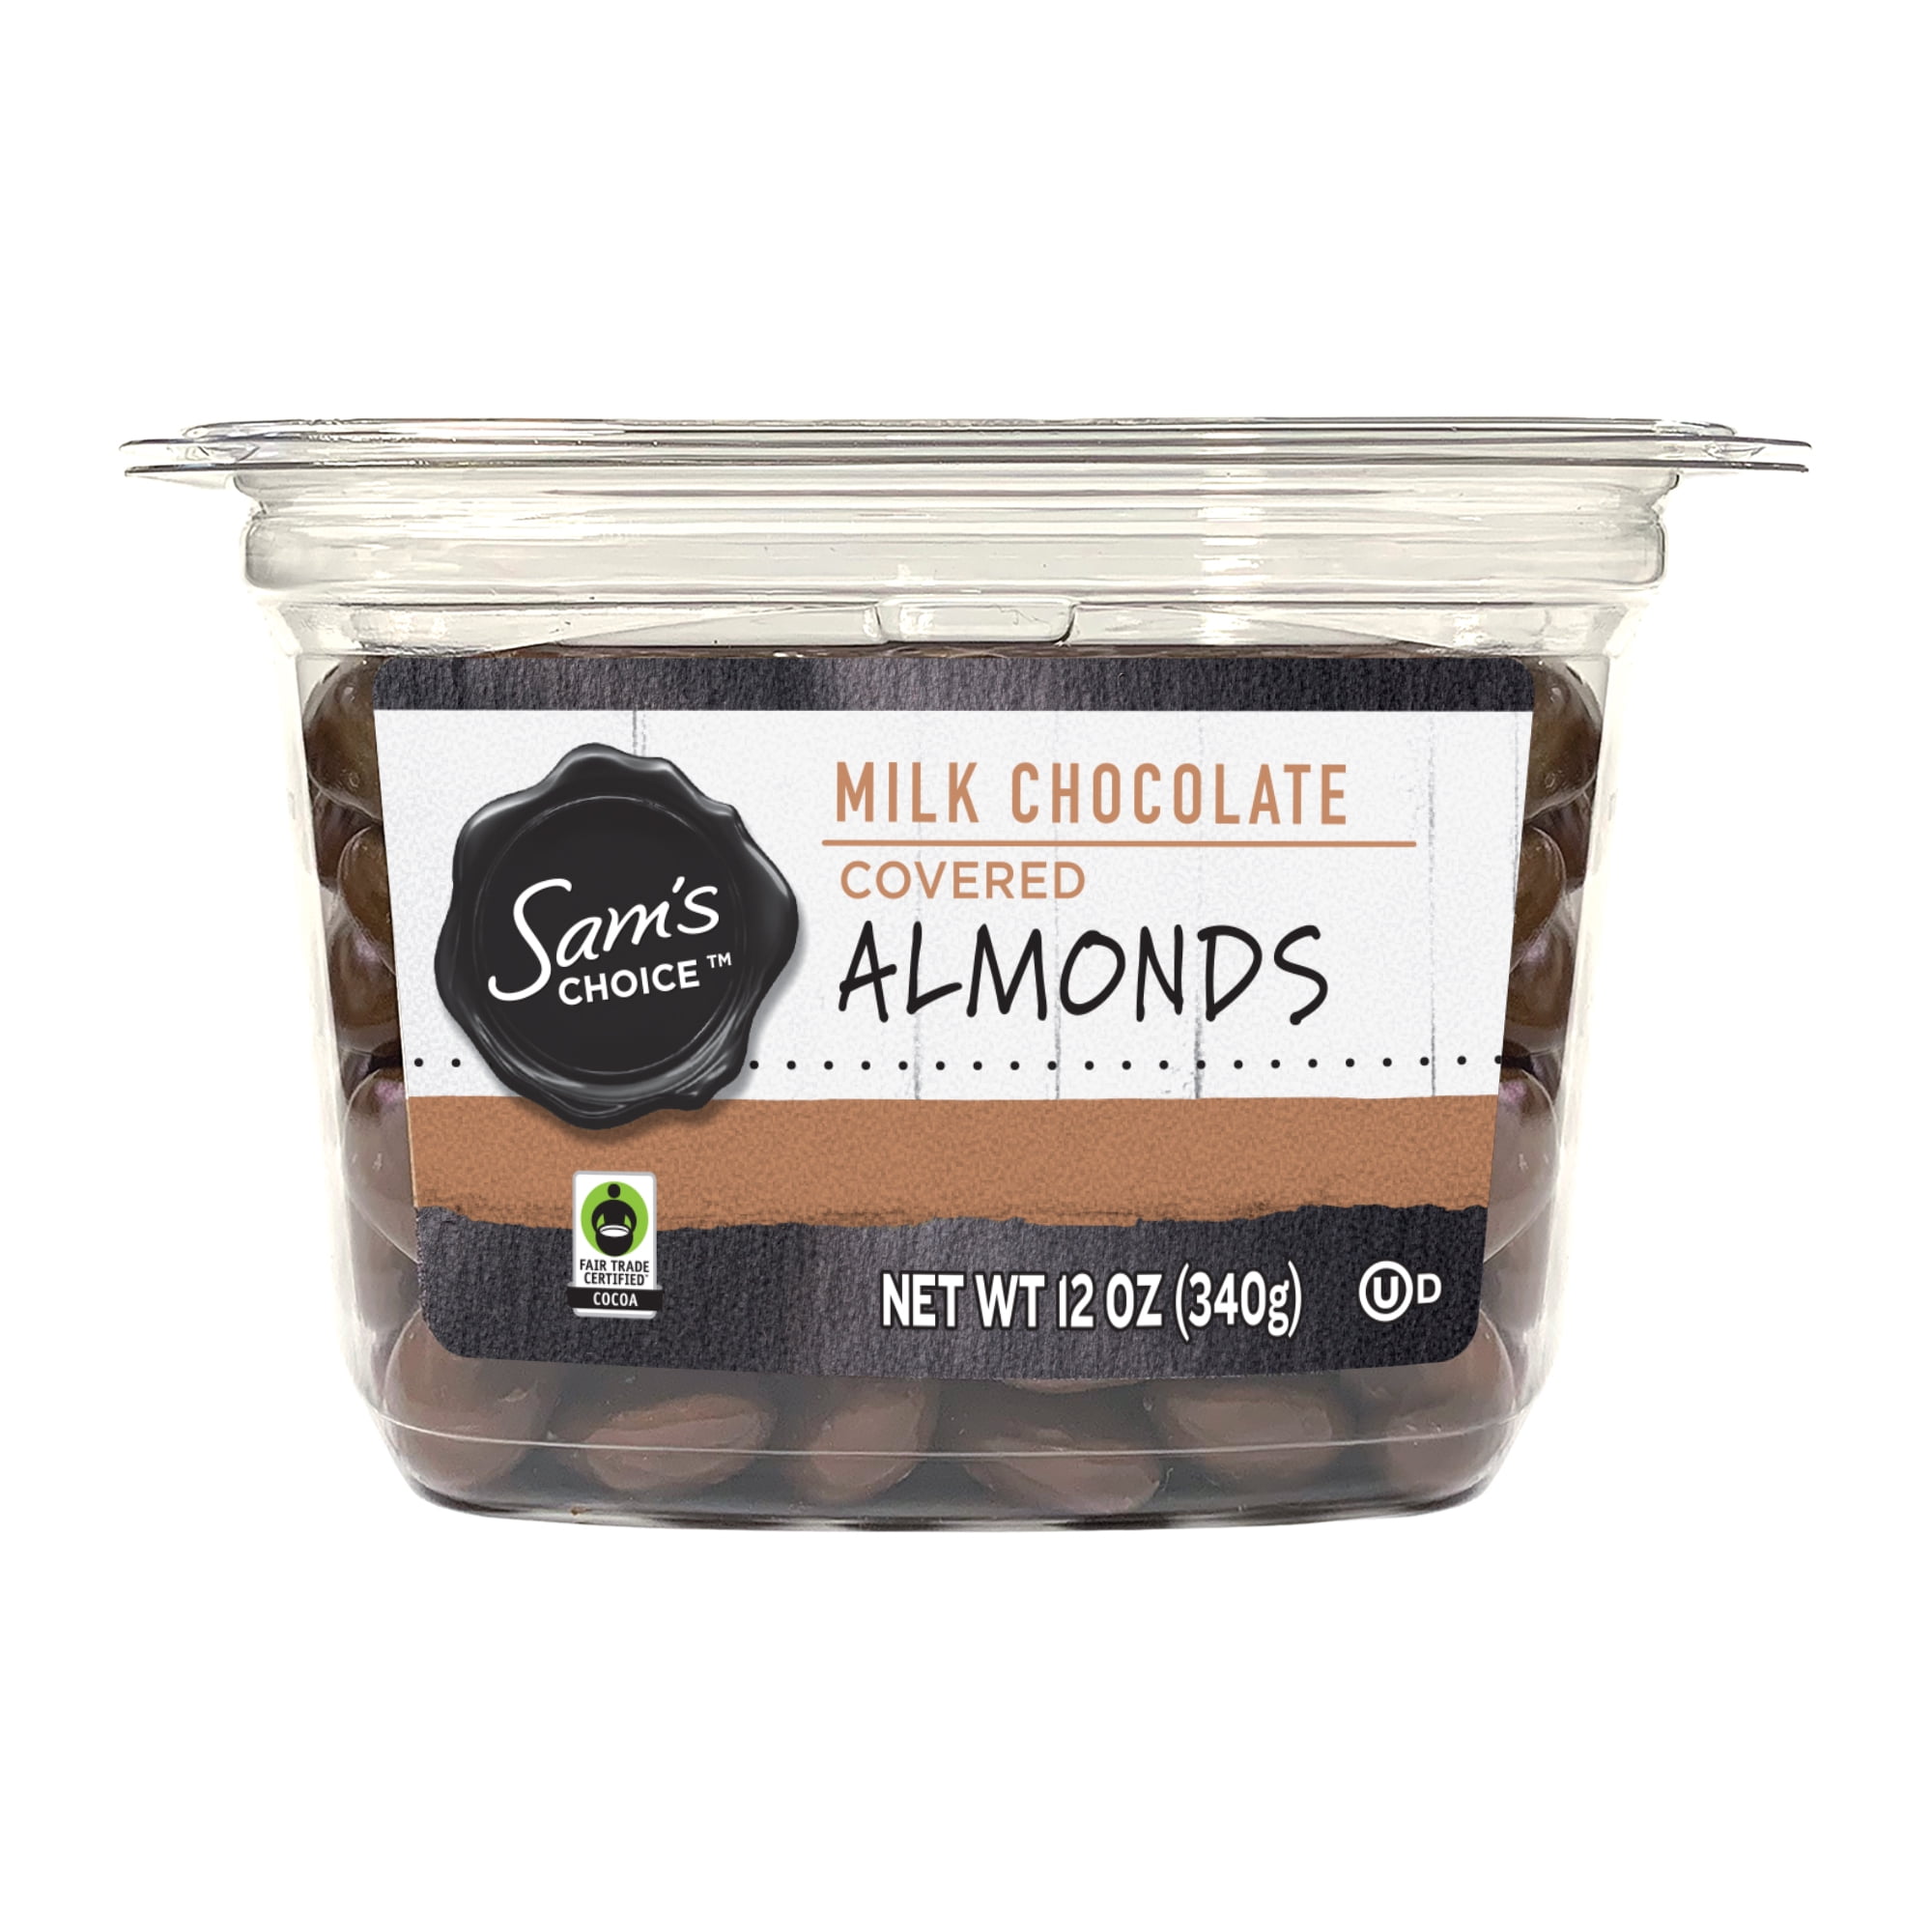 Sam's Choice Milk Chocolate Covered Almonds, 12 oz